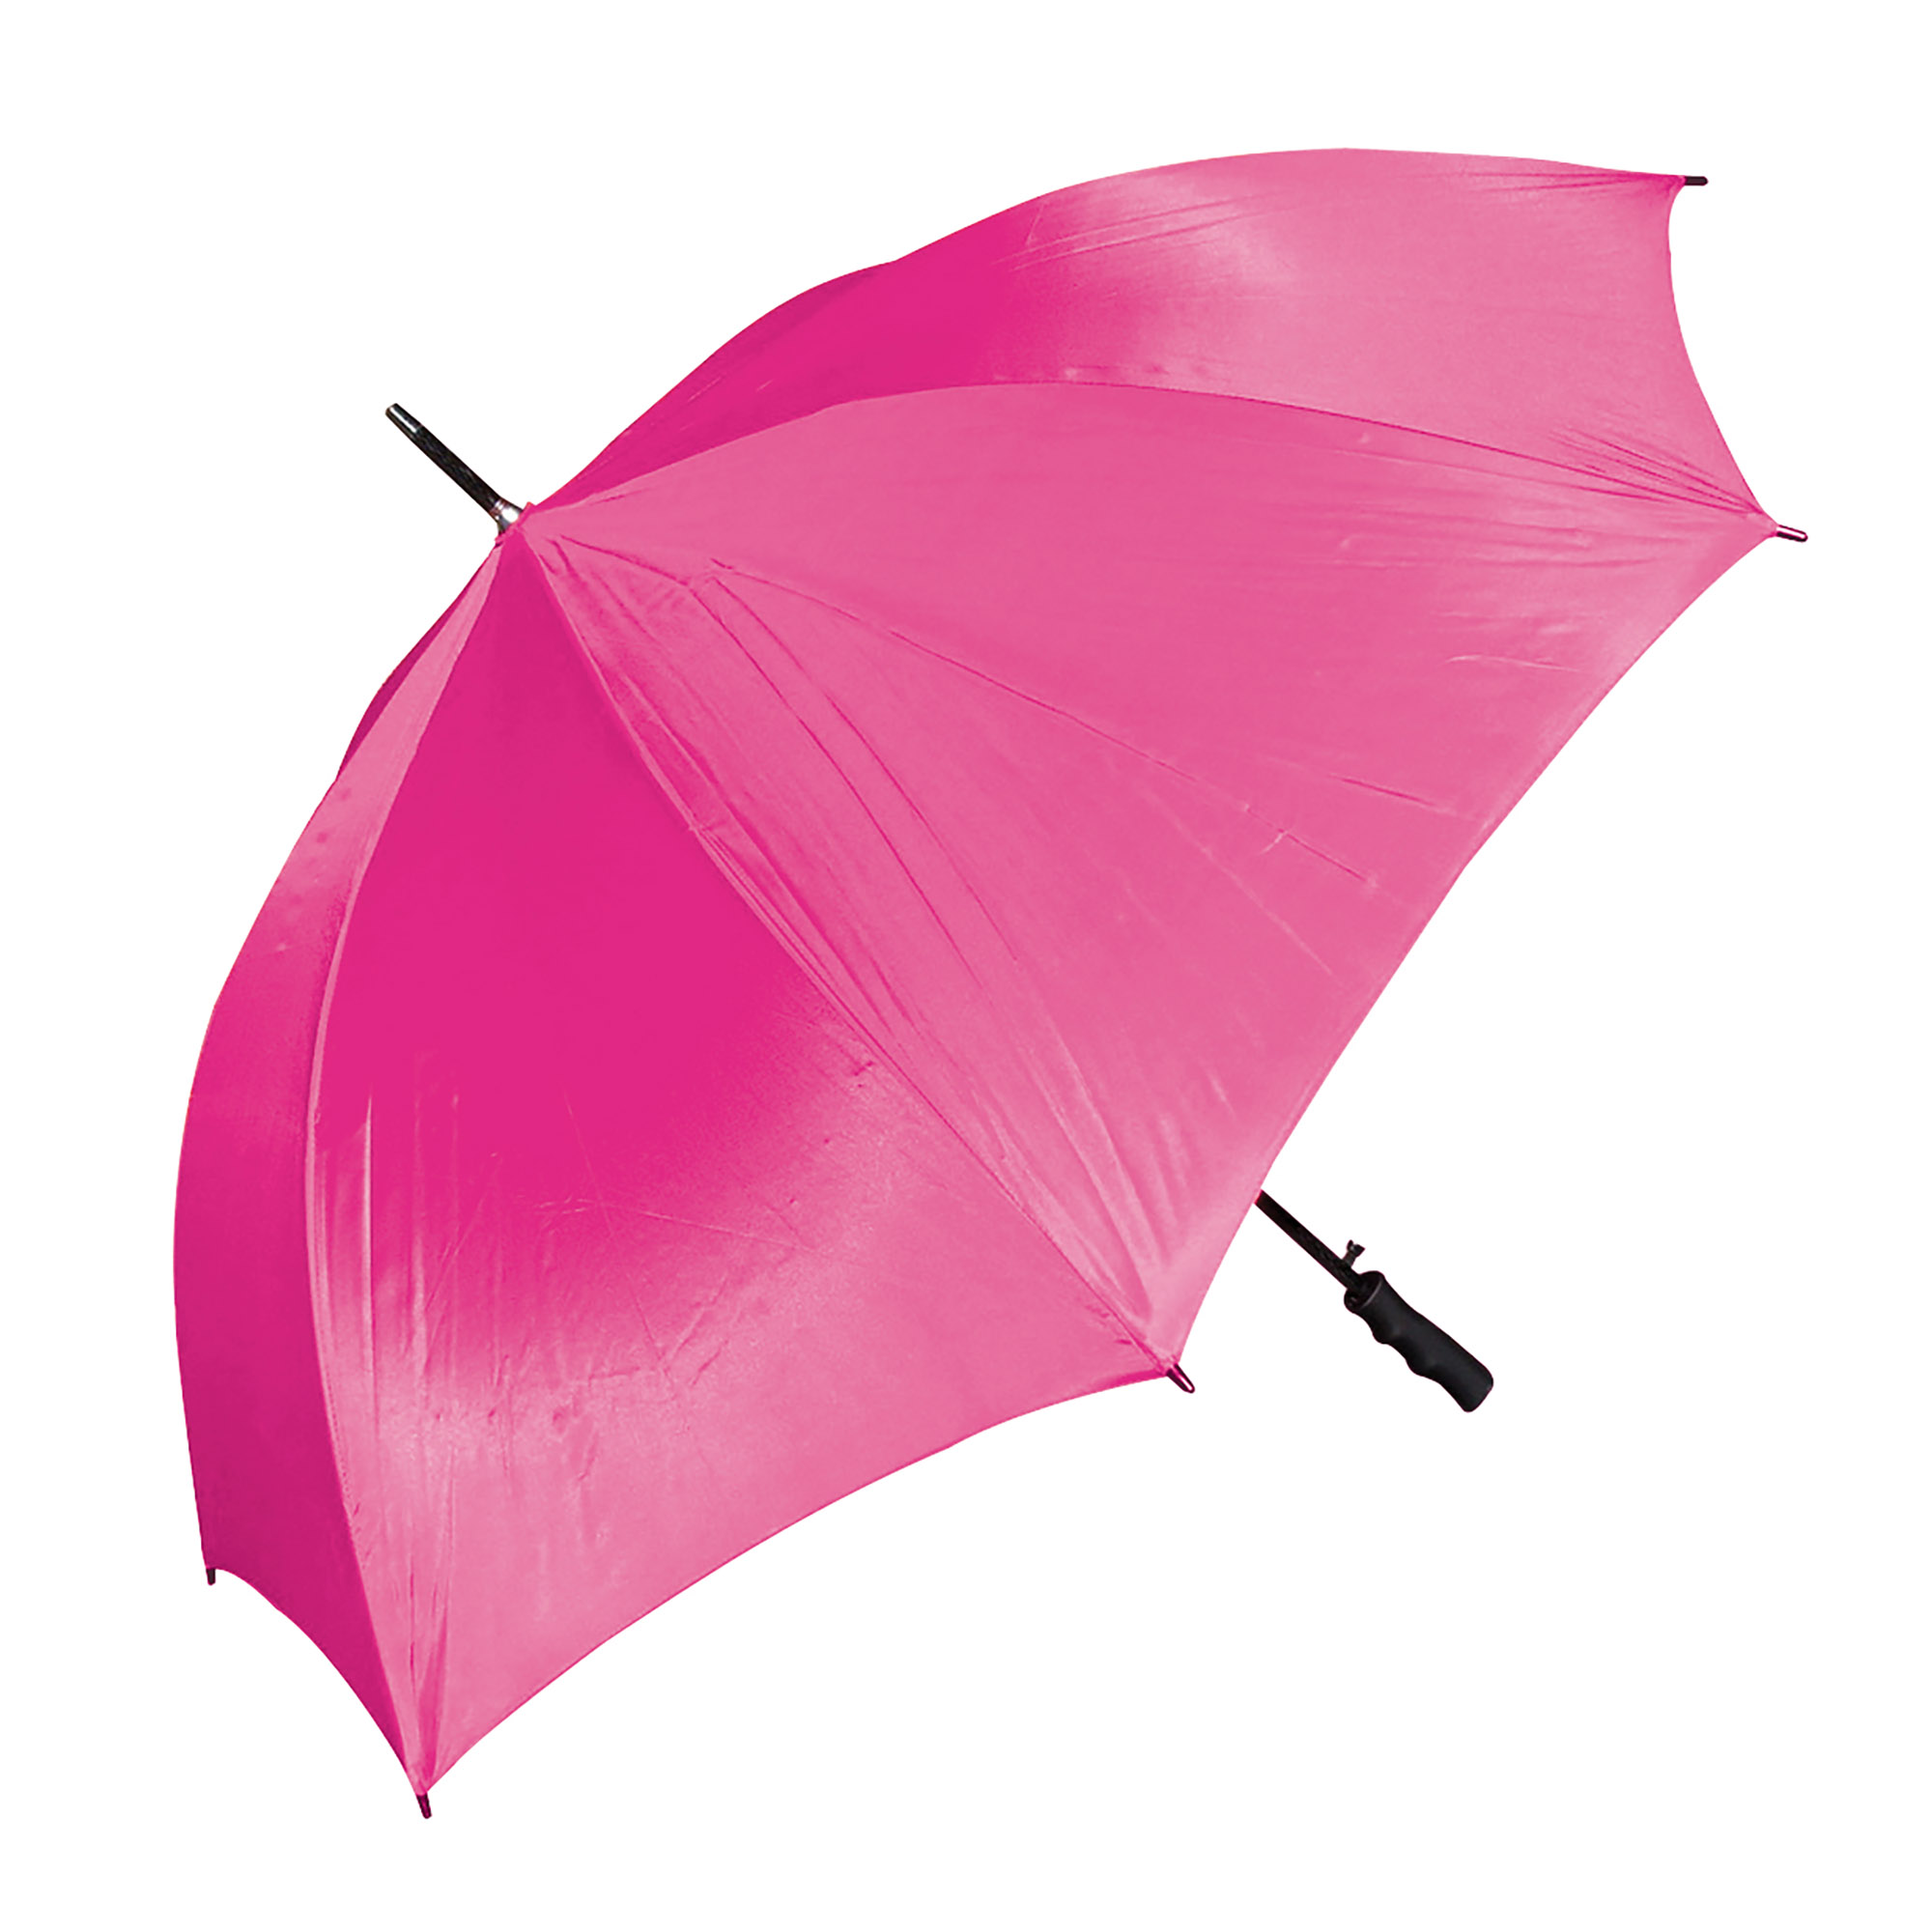 Bulk Promotional Hot Pink Sands Umbrella Online In Perth Australia